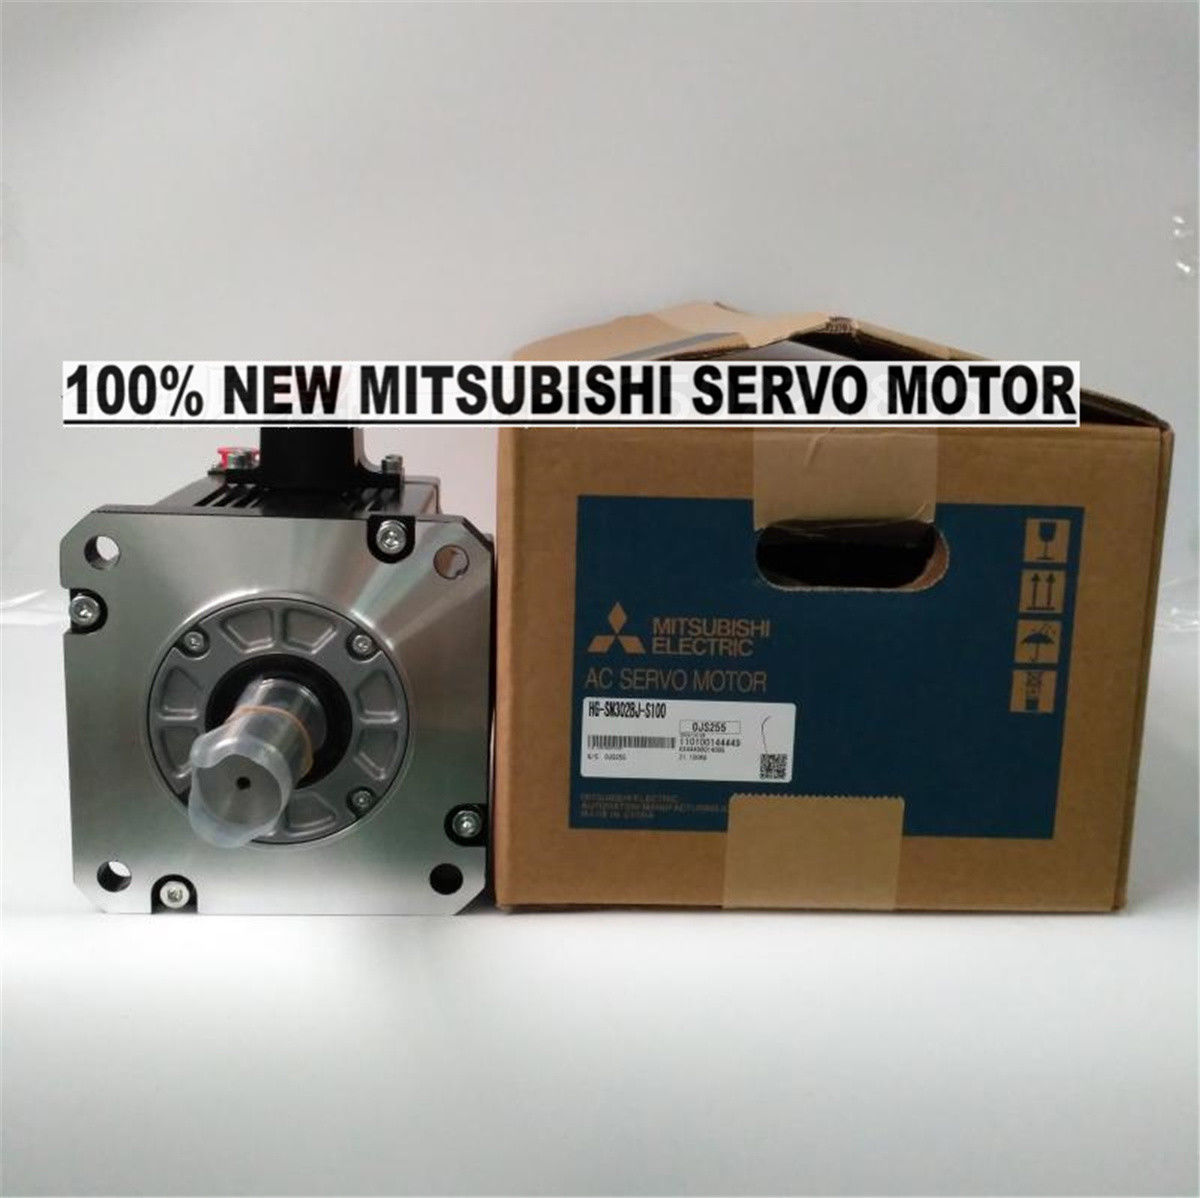 NEW Mitsubishi Servo Motor HG-SN302BJ-S100 in box HGSN302BJS100